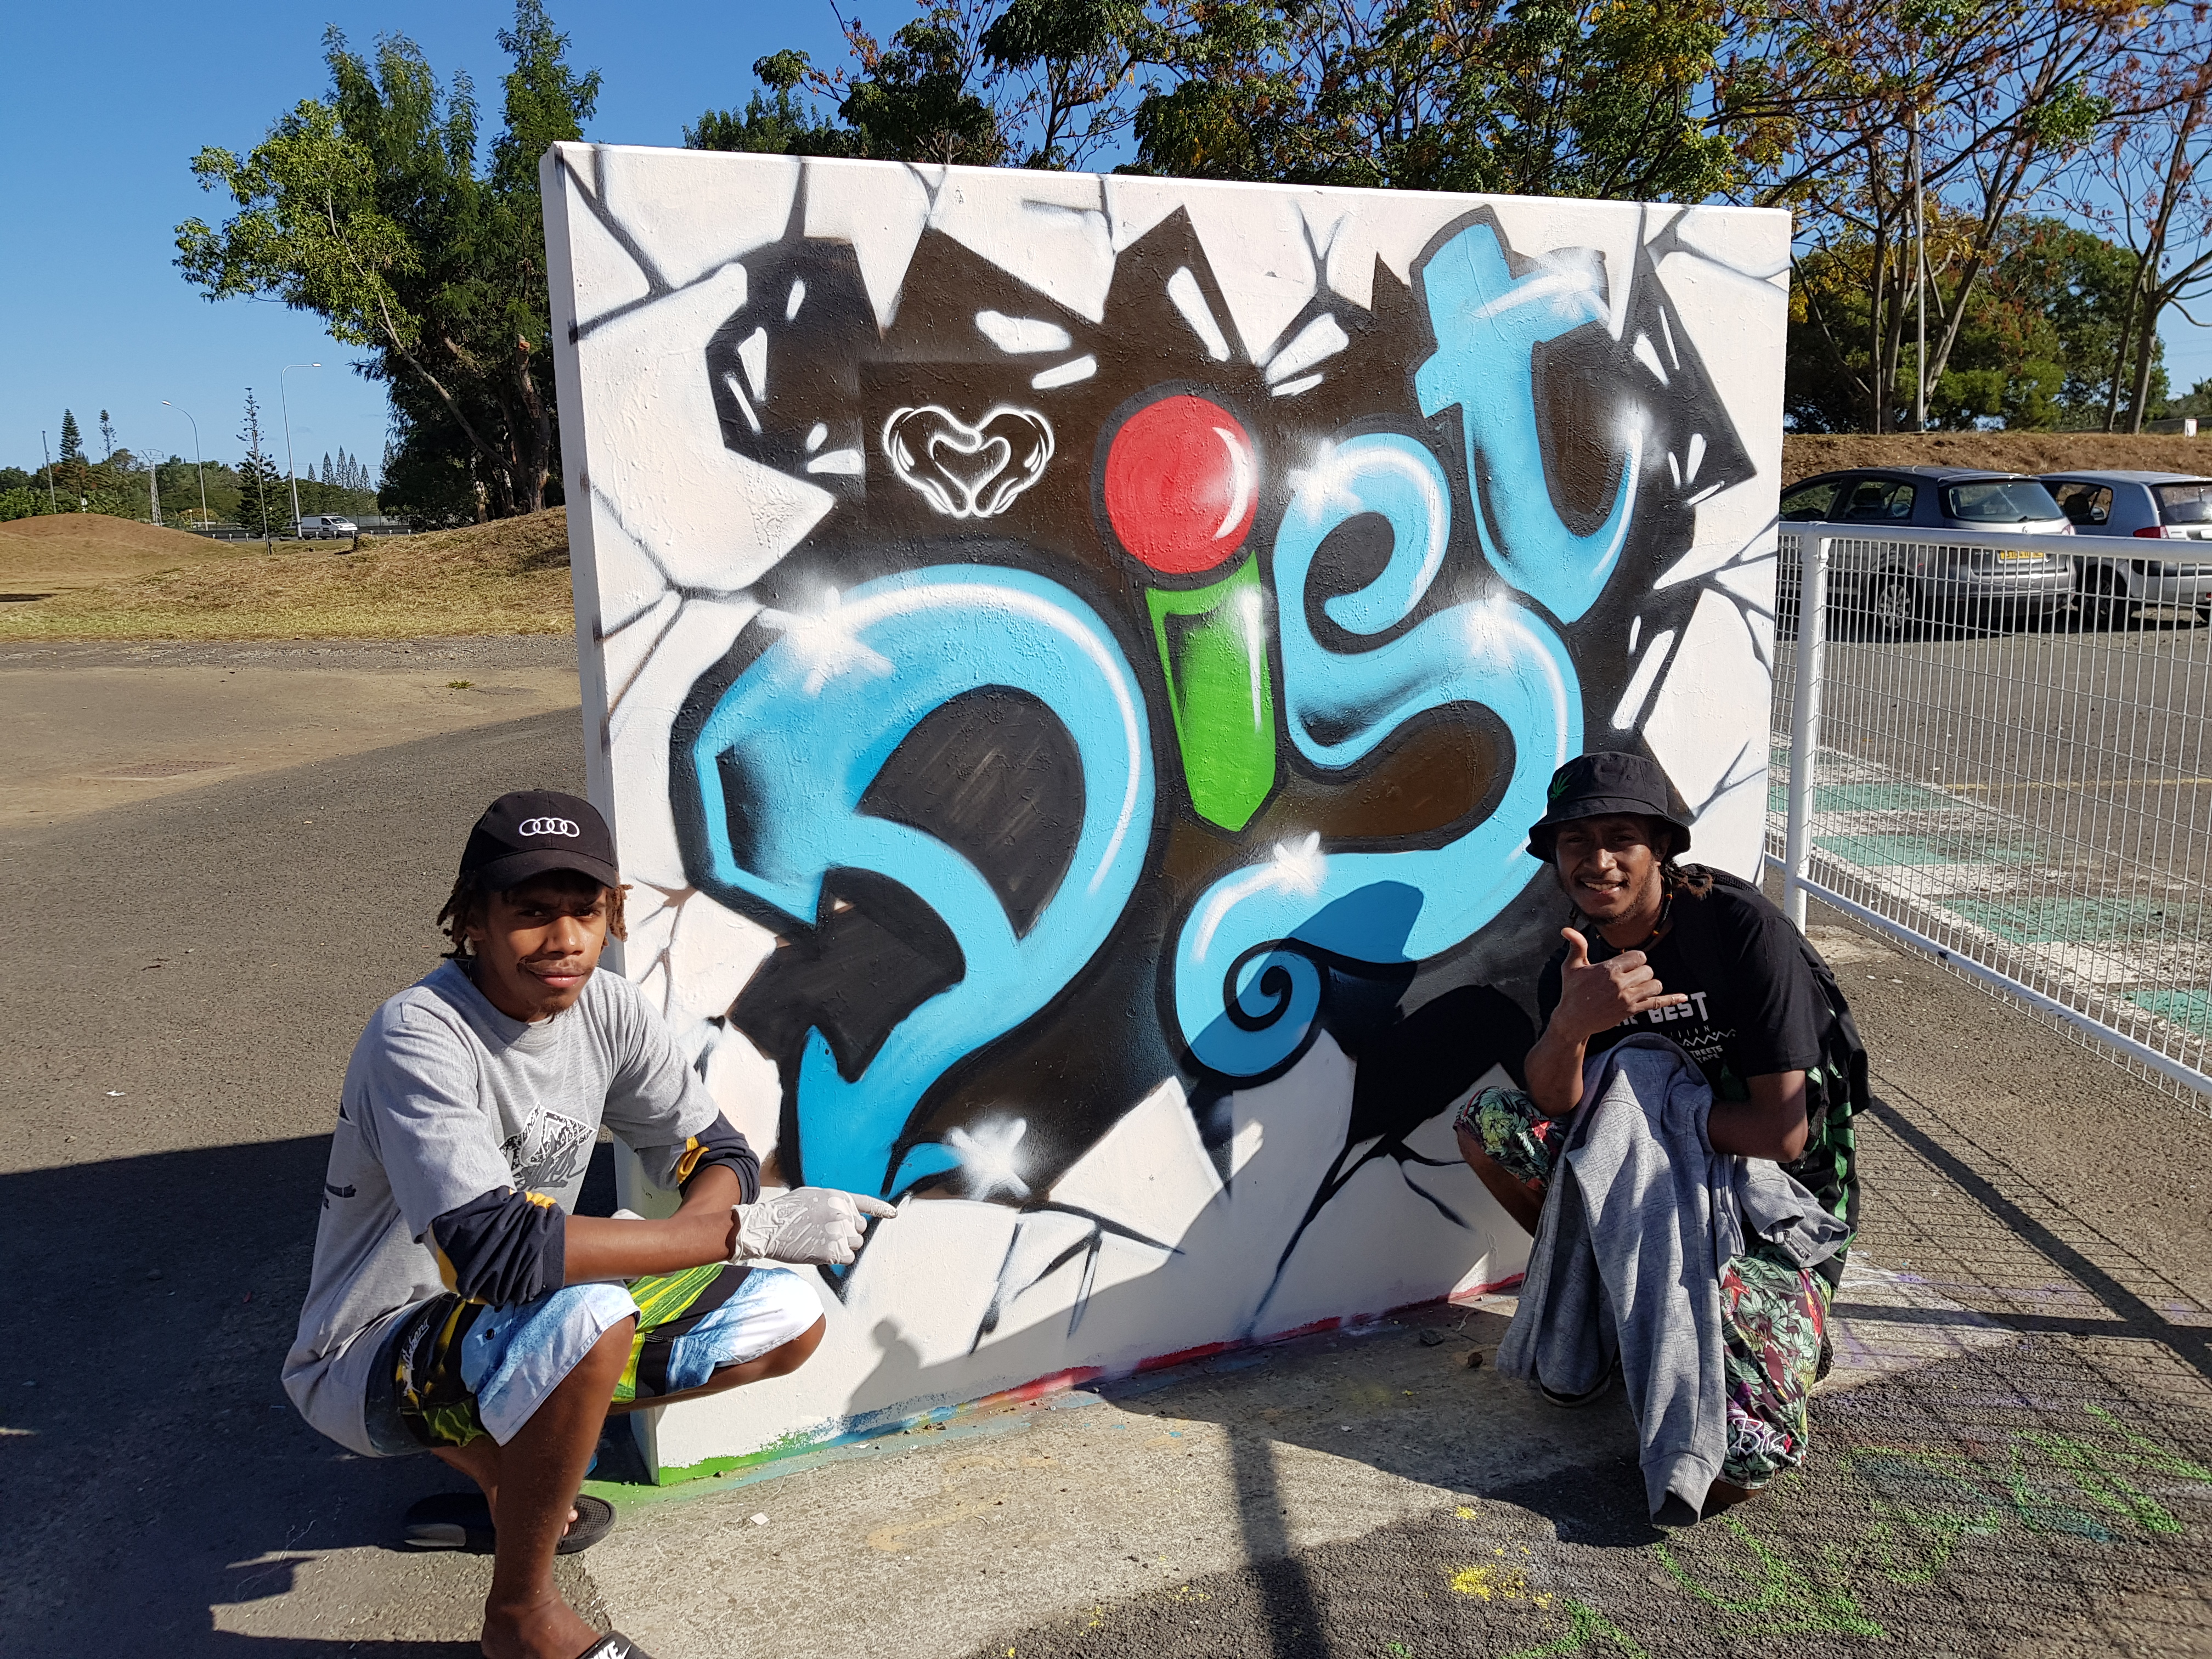 Graff battle at Dumbea skate park (thanks to Dumbea city) - team Vanuatu